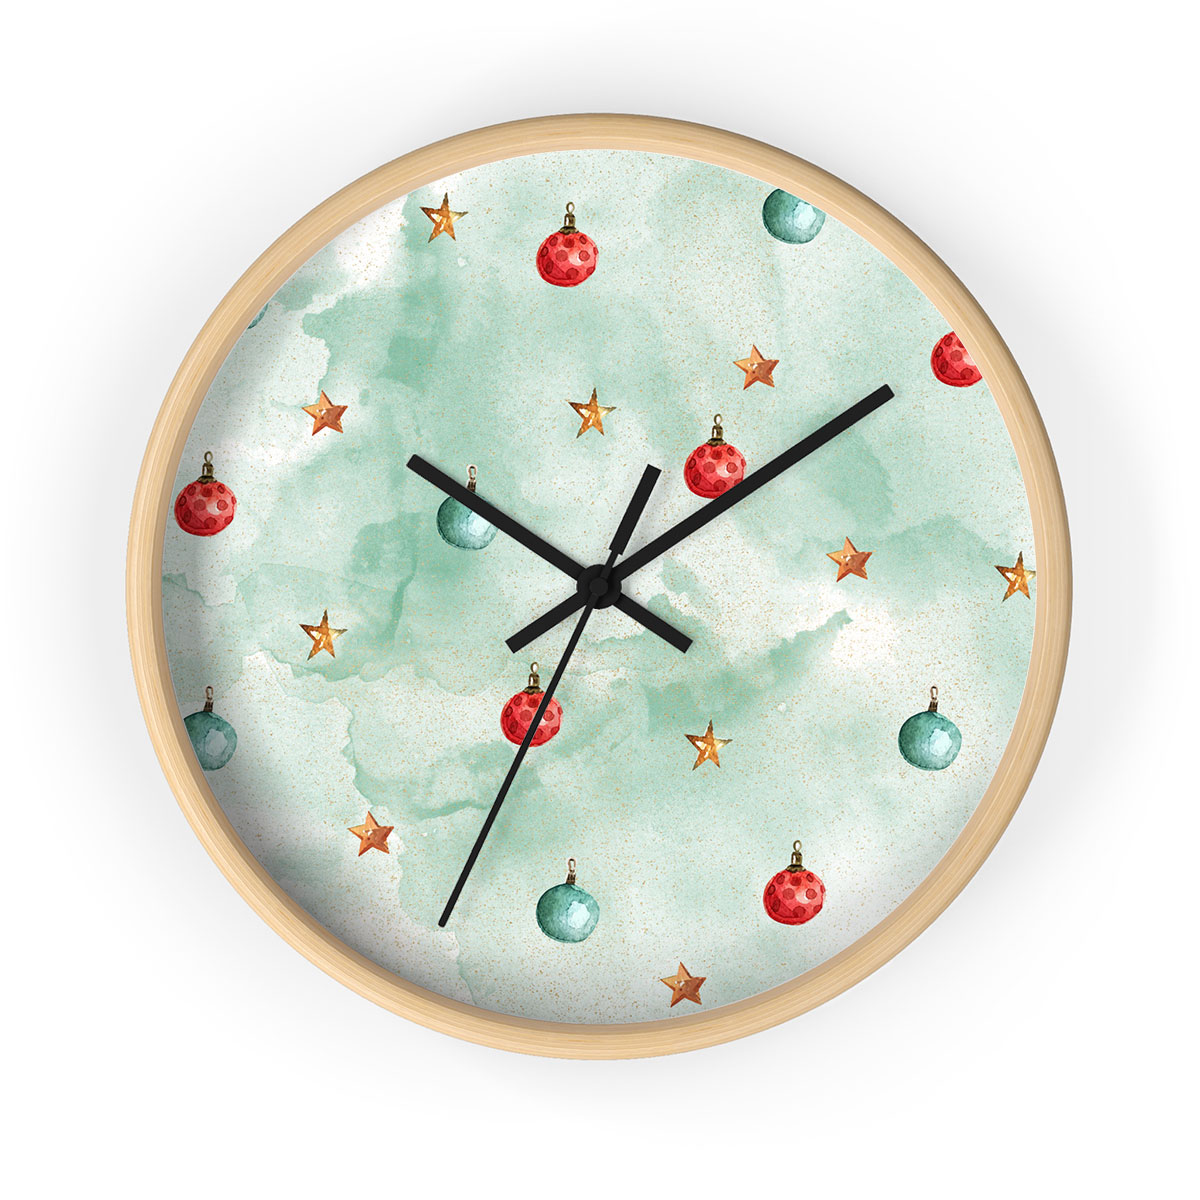 Watercolor Christmas Balls And Stars Pattern Printed Wooden Wall Clock